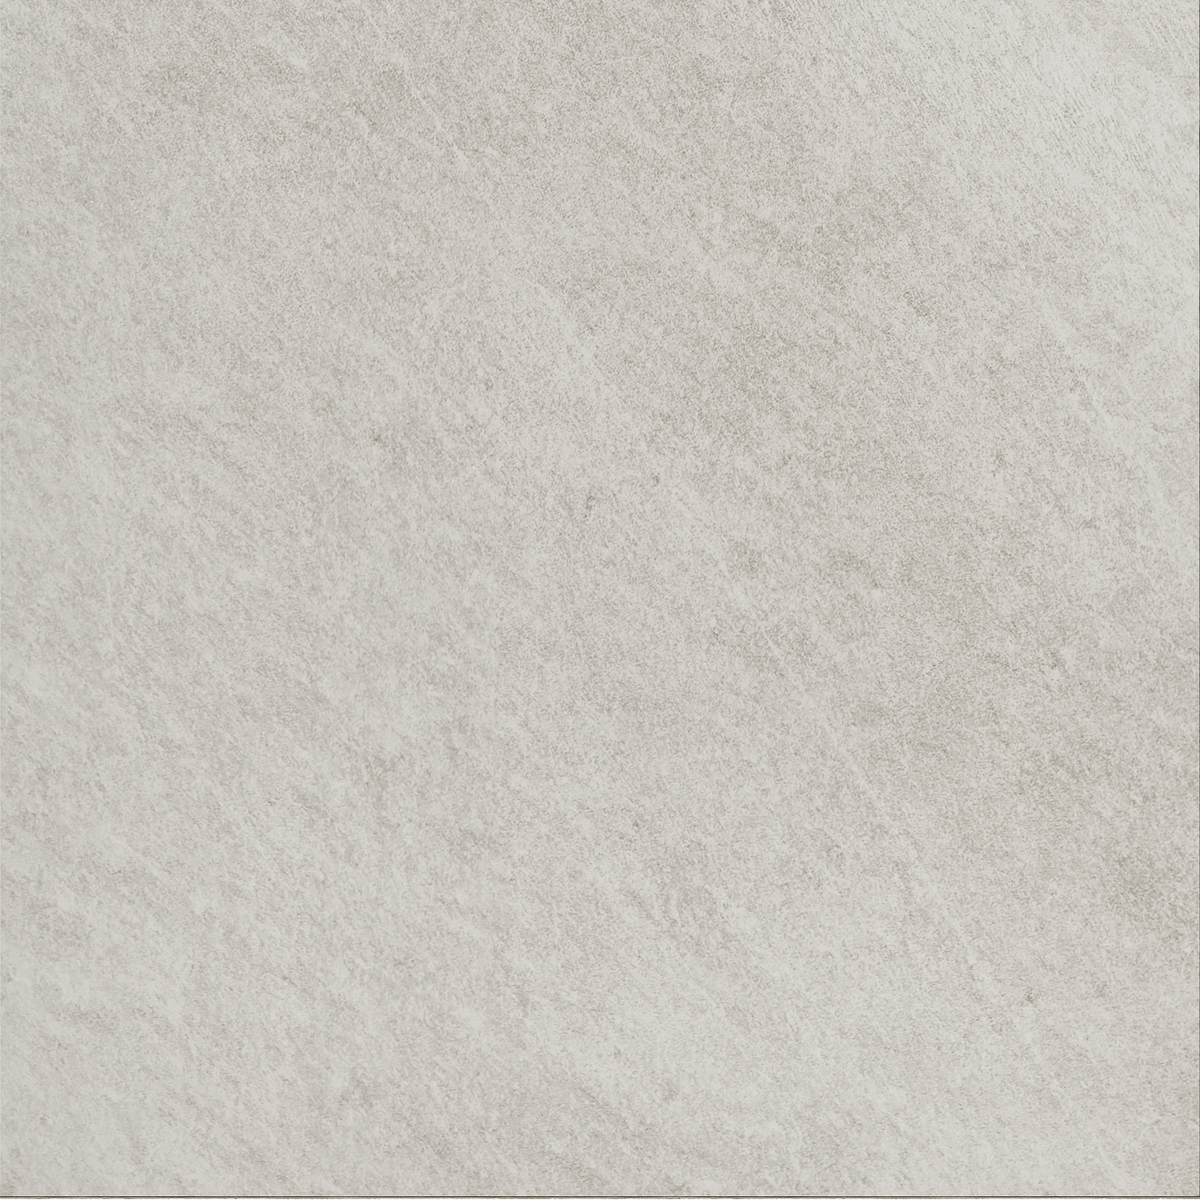 Imola X-Rock Bianco Natural Bocciardato Matt Outdoor Bianco 155755 gehaemmert matt natur 60x60cm rektifiziert 20mm